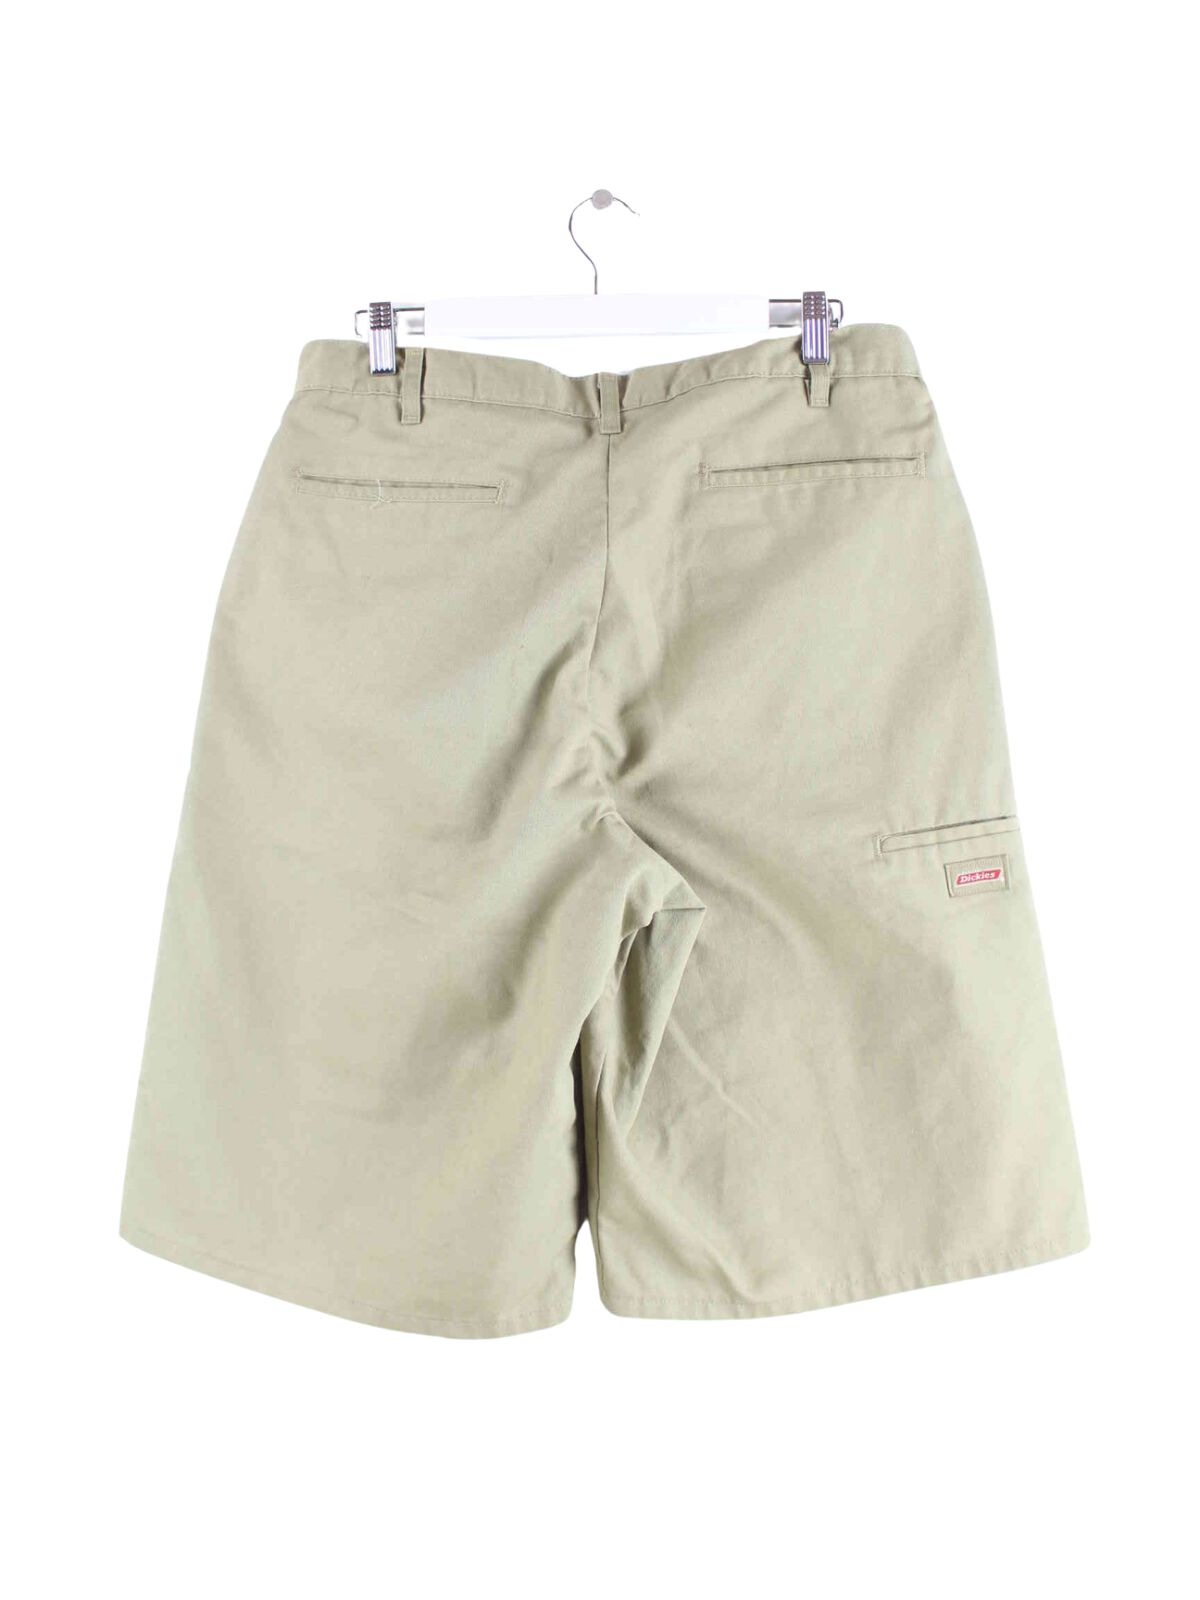 Dickies Workwear Chino Shorts Beige W34 (back image)